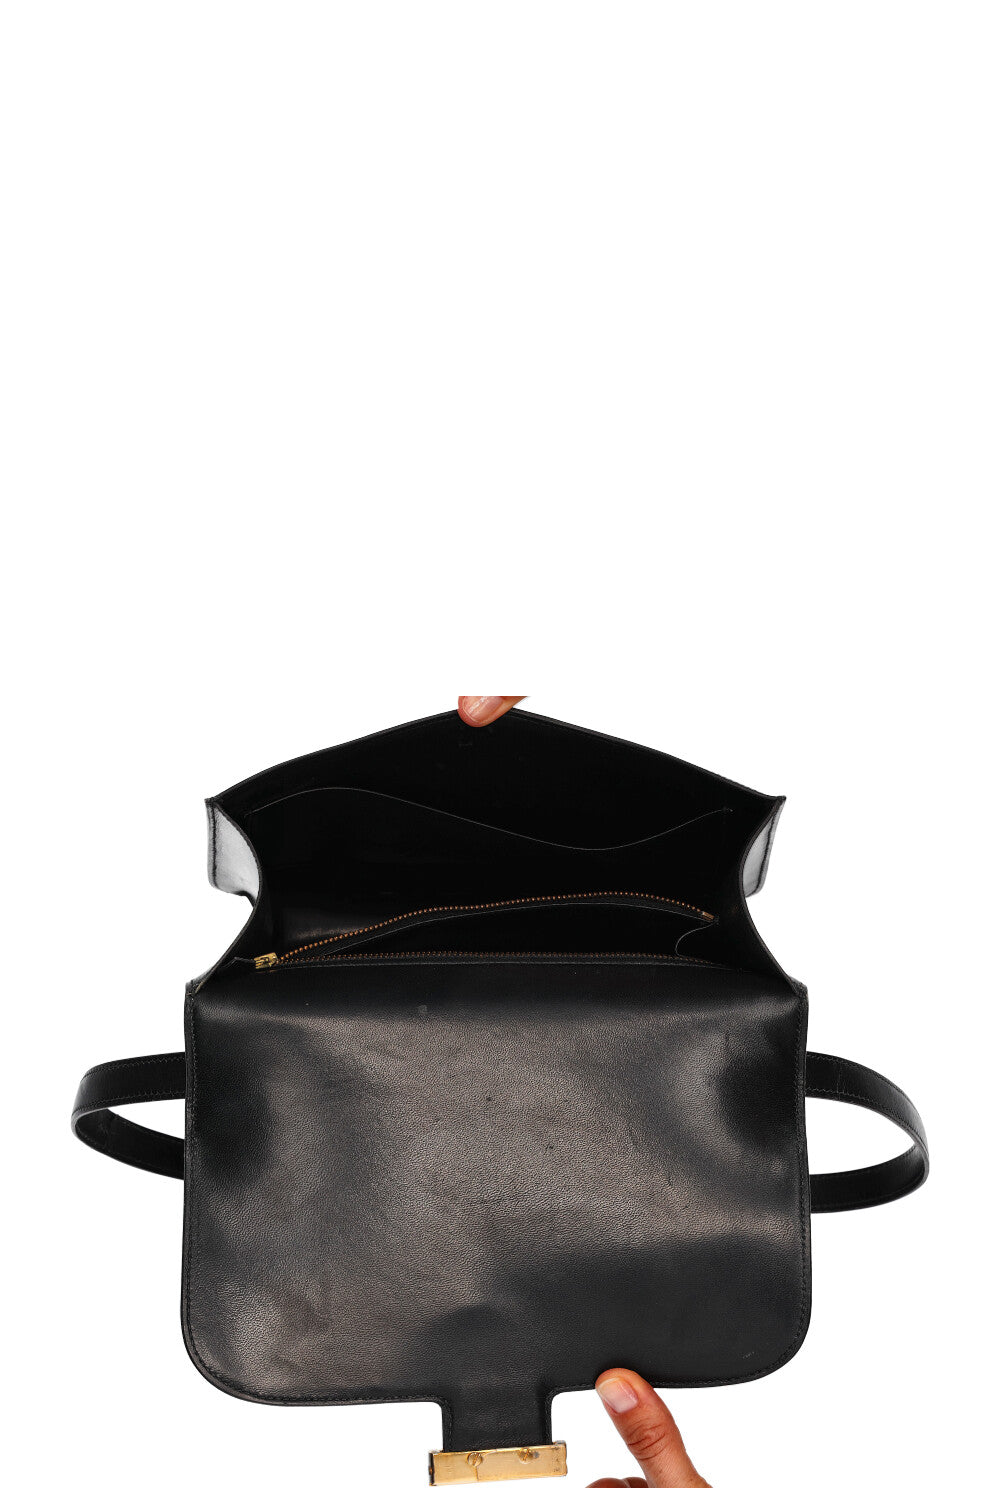 Hermes SPECIAL EDITION CONSTANCE! Black Box Leather w/Adventurine Hardware!  Plus RTW St Tropez Picks 